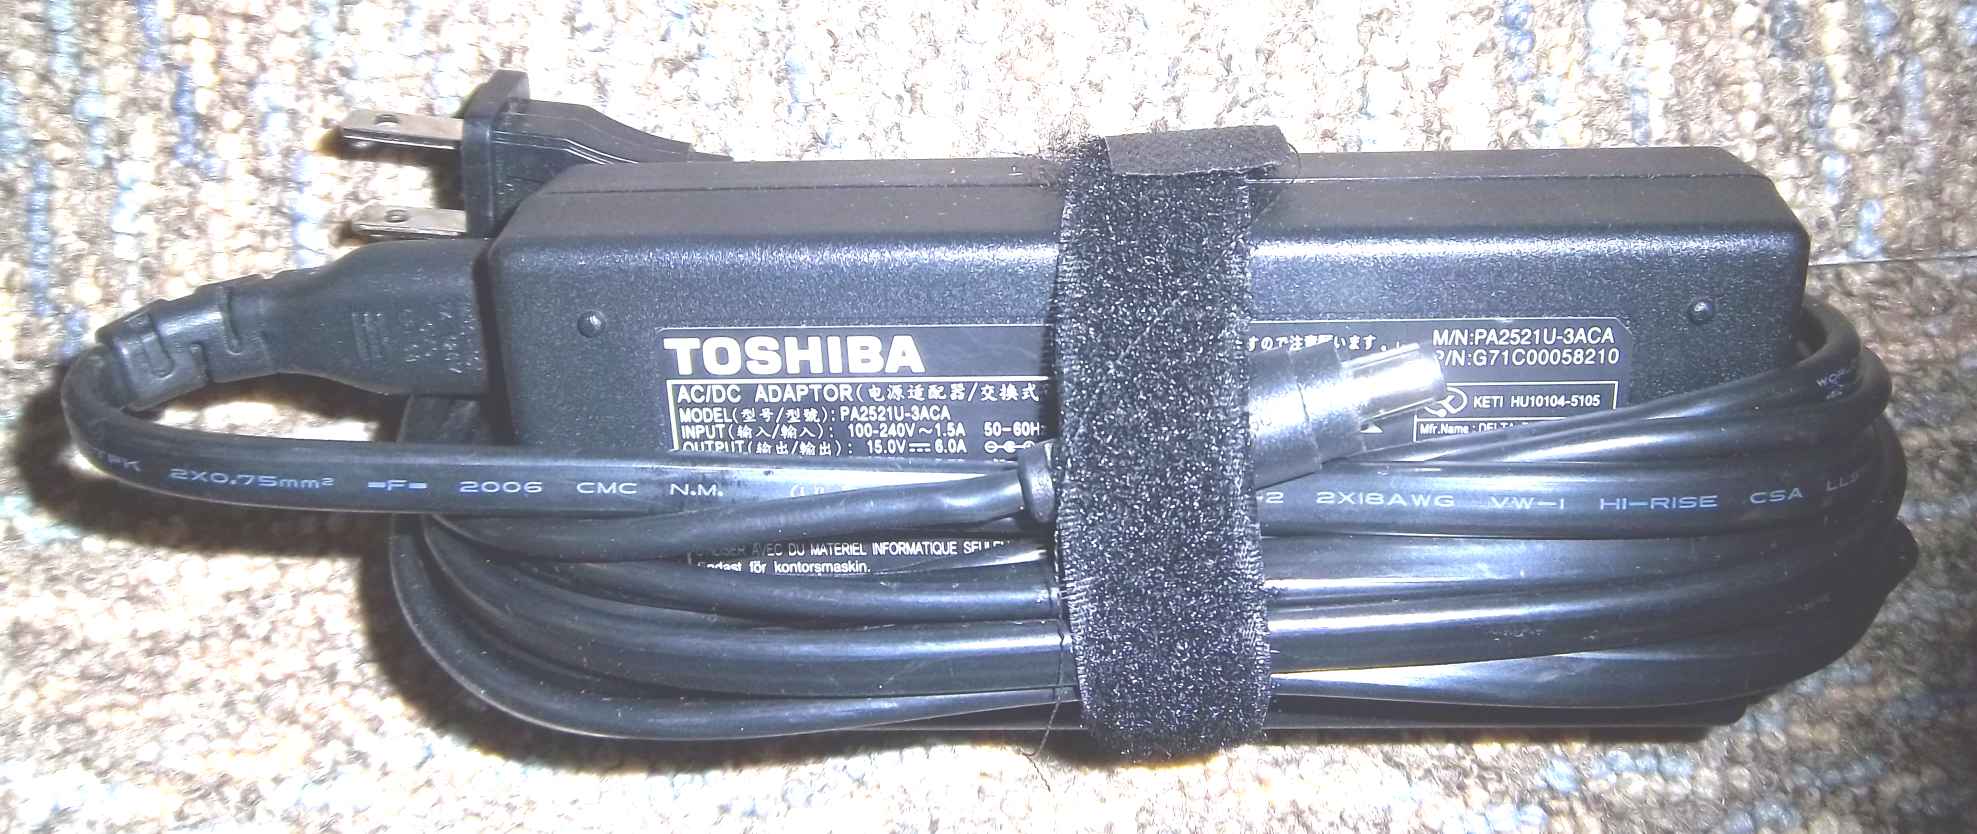 Toshiba AC-DC Laptop Adapter model PA2521U-3ACA